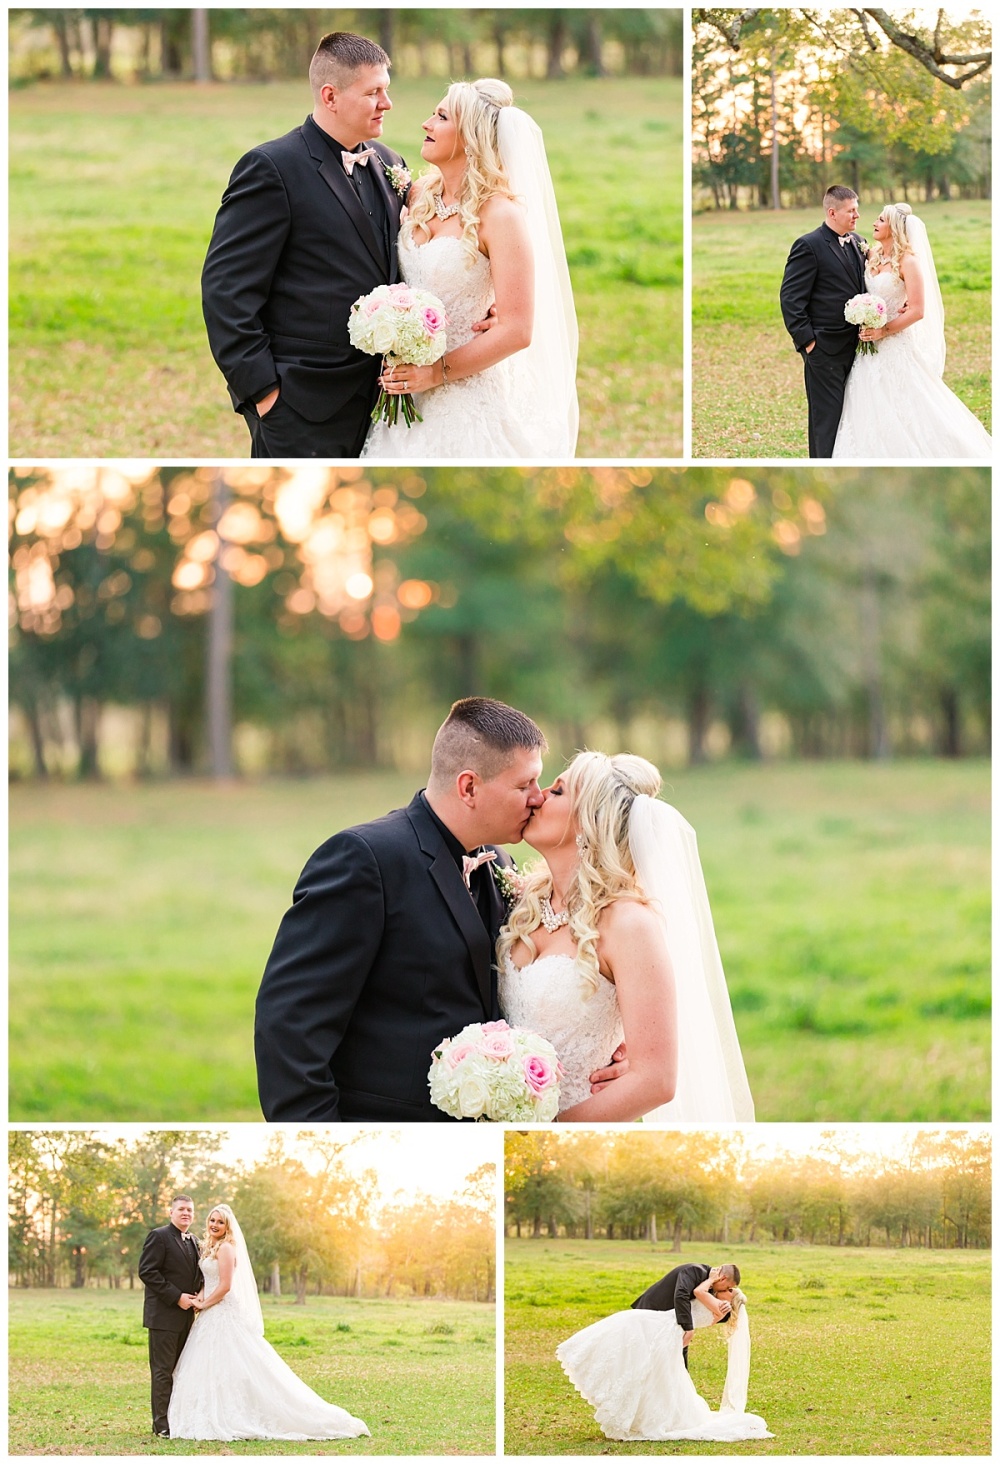 Carly-Barton-Photography-South-Texas-Wedding-Photographer-SJP-Ranch-Hardin_0048